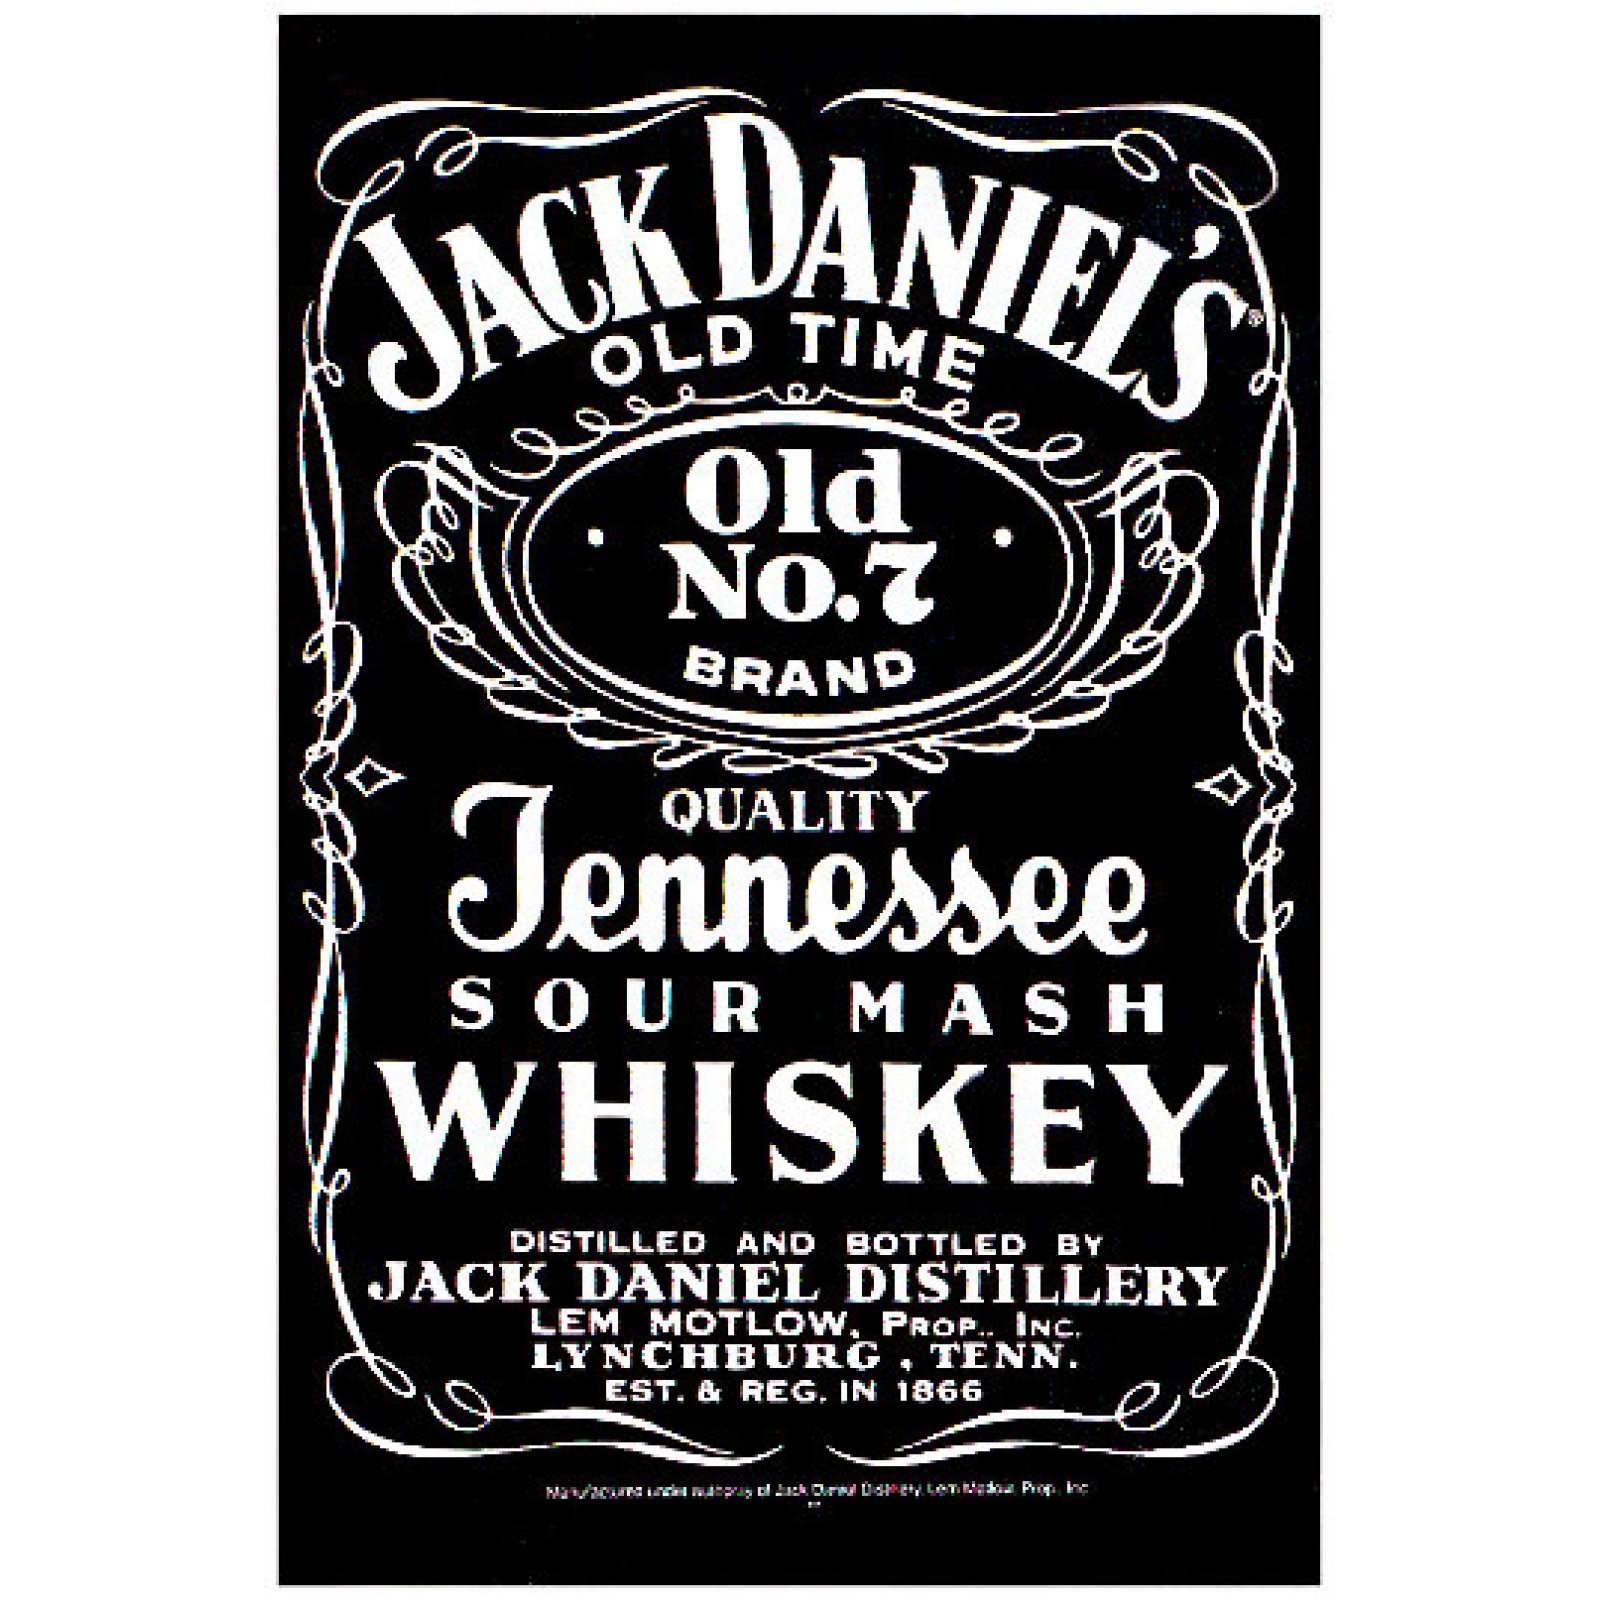 Download Jack Daniels Label Vector at Vectorified.com | Collection ...